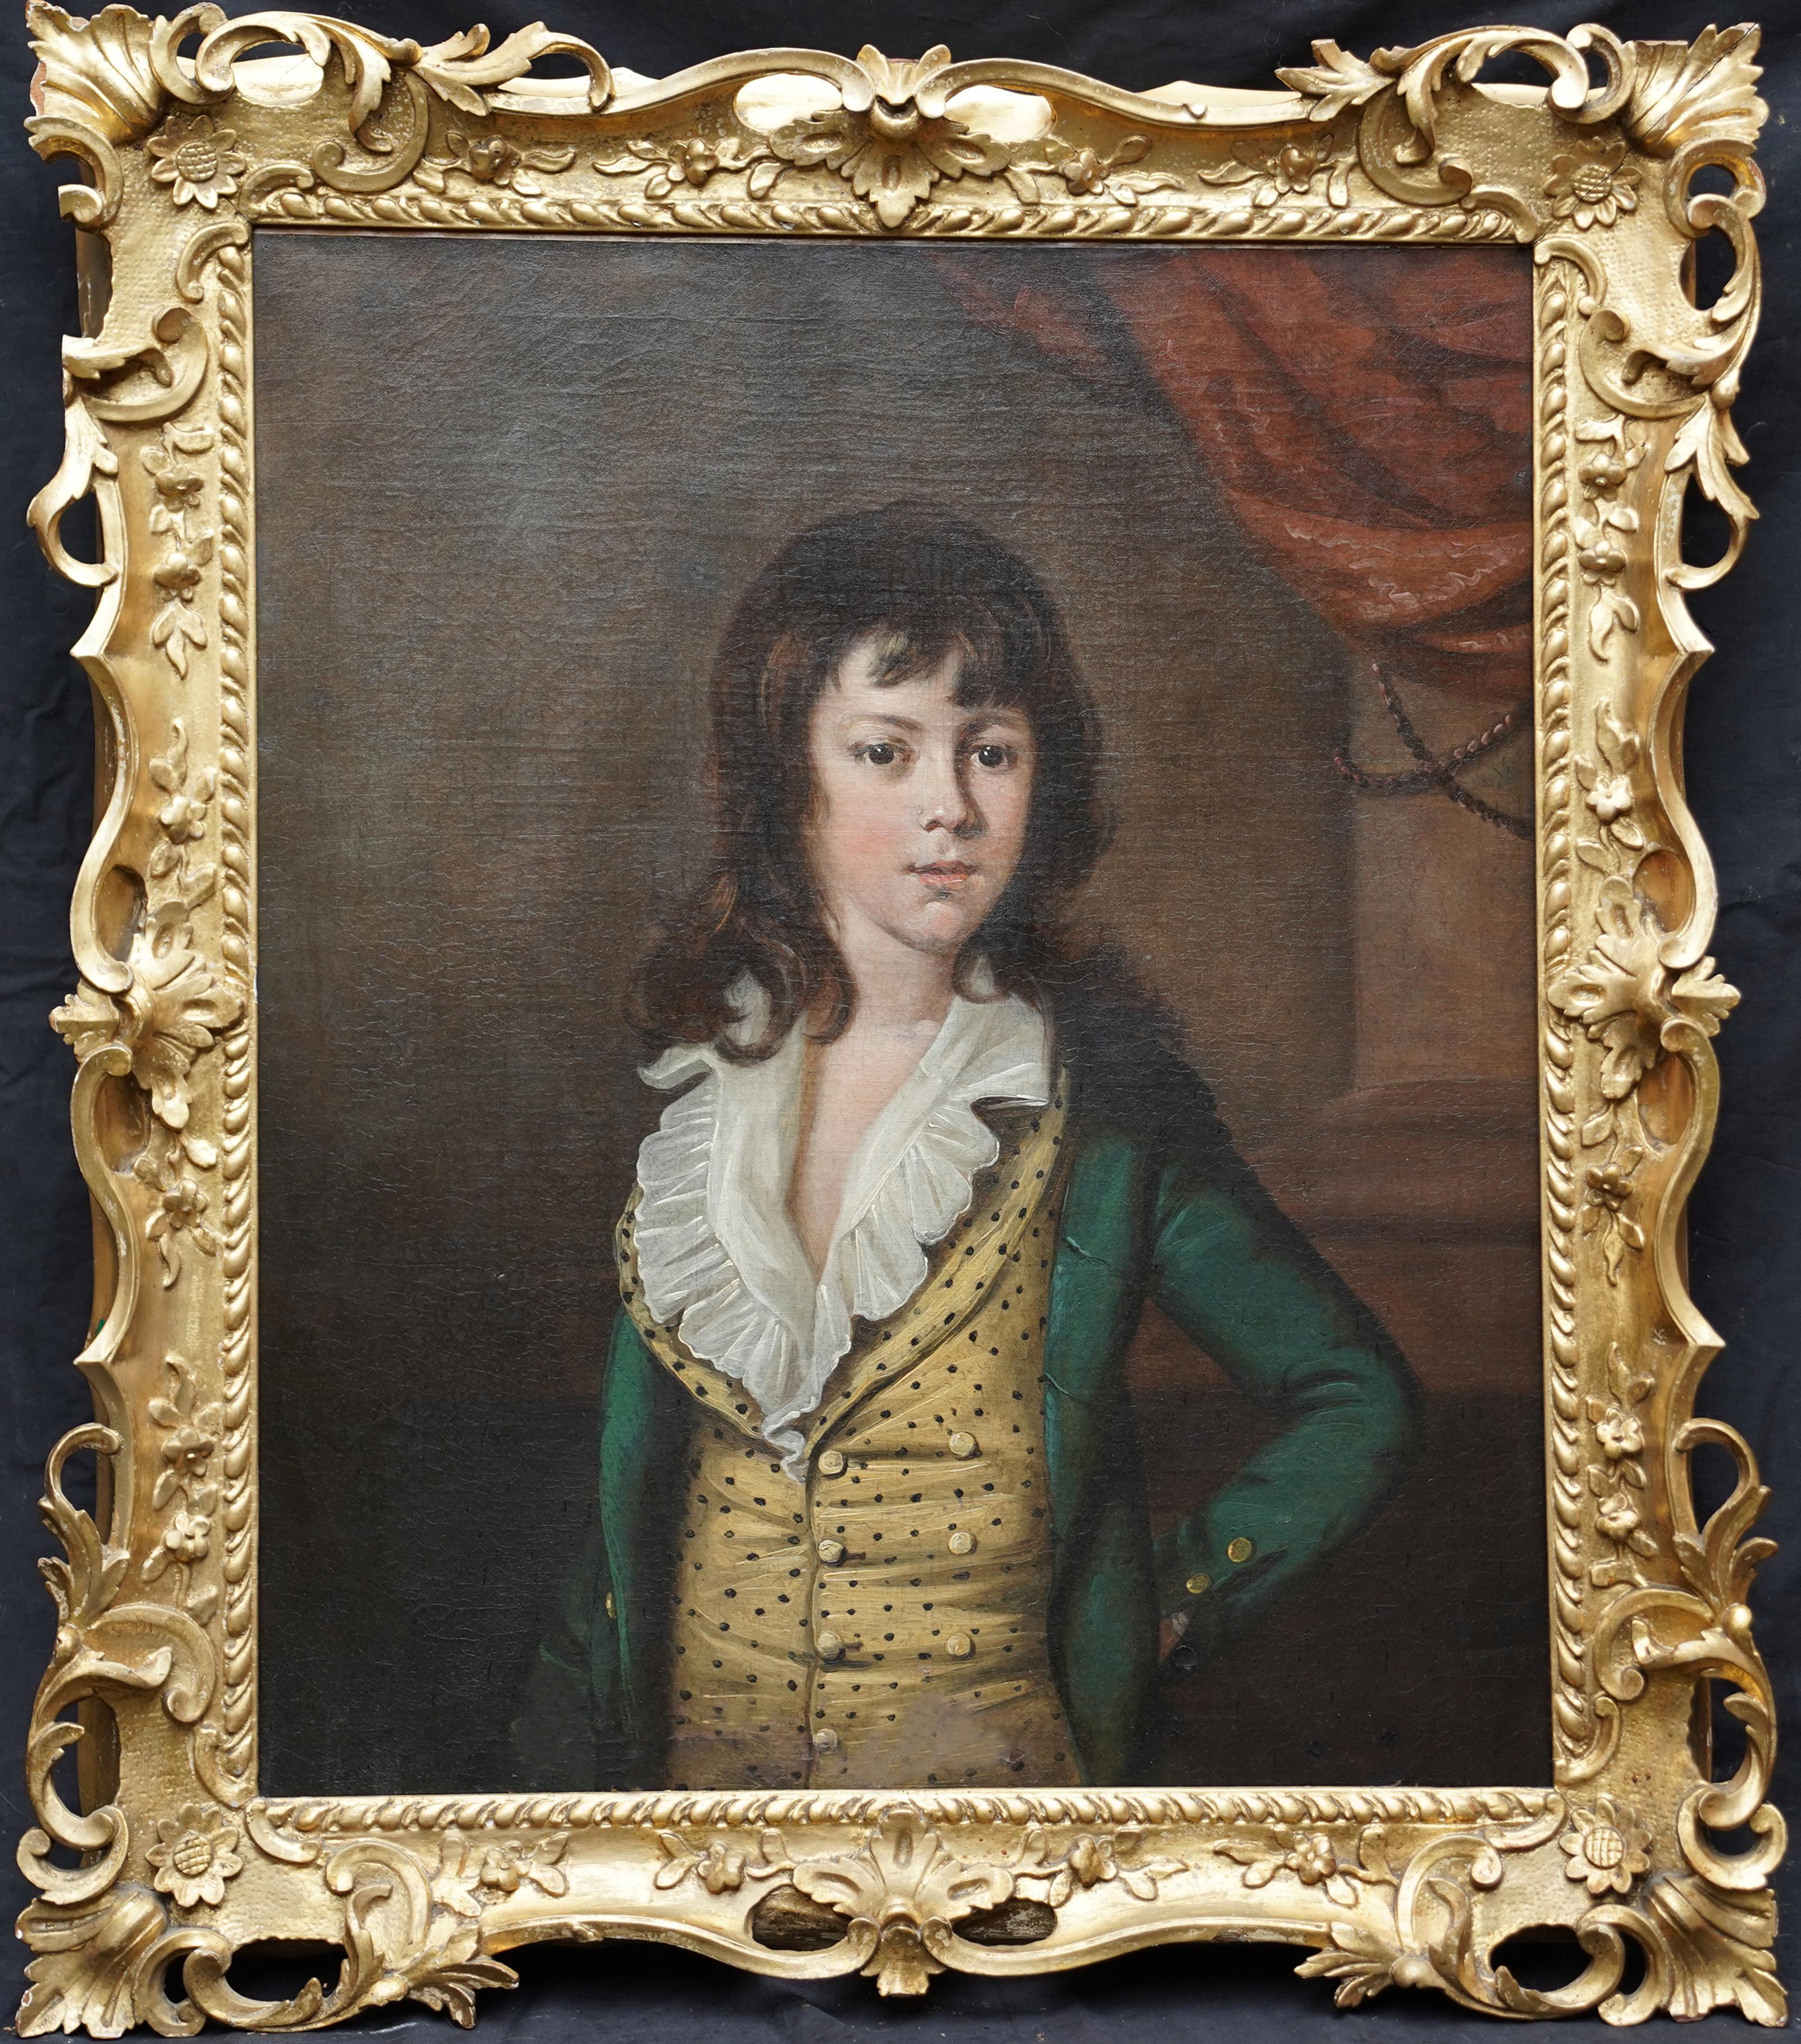 John Berridge Portrait Painting - Portrait of Boy in Yellow Waistcoat - British 18thC art Old Master oil painting